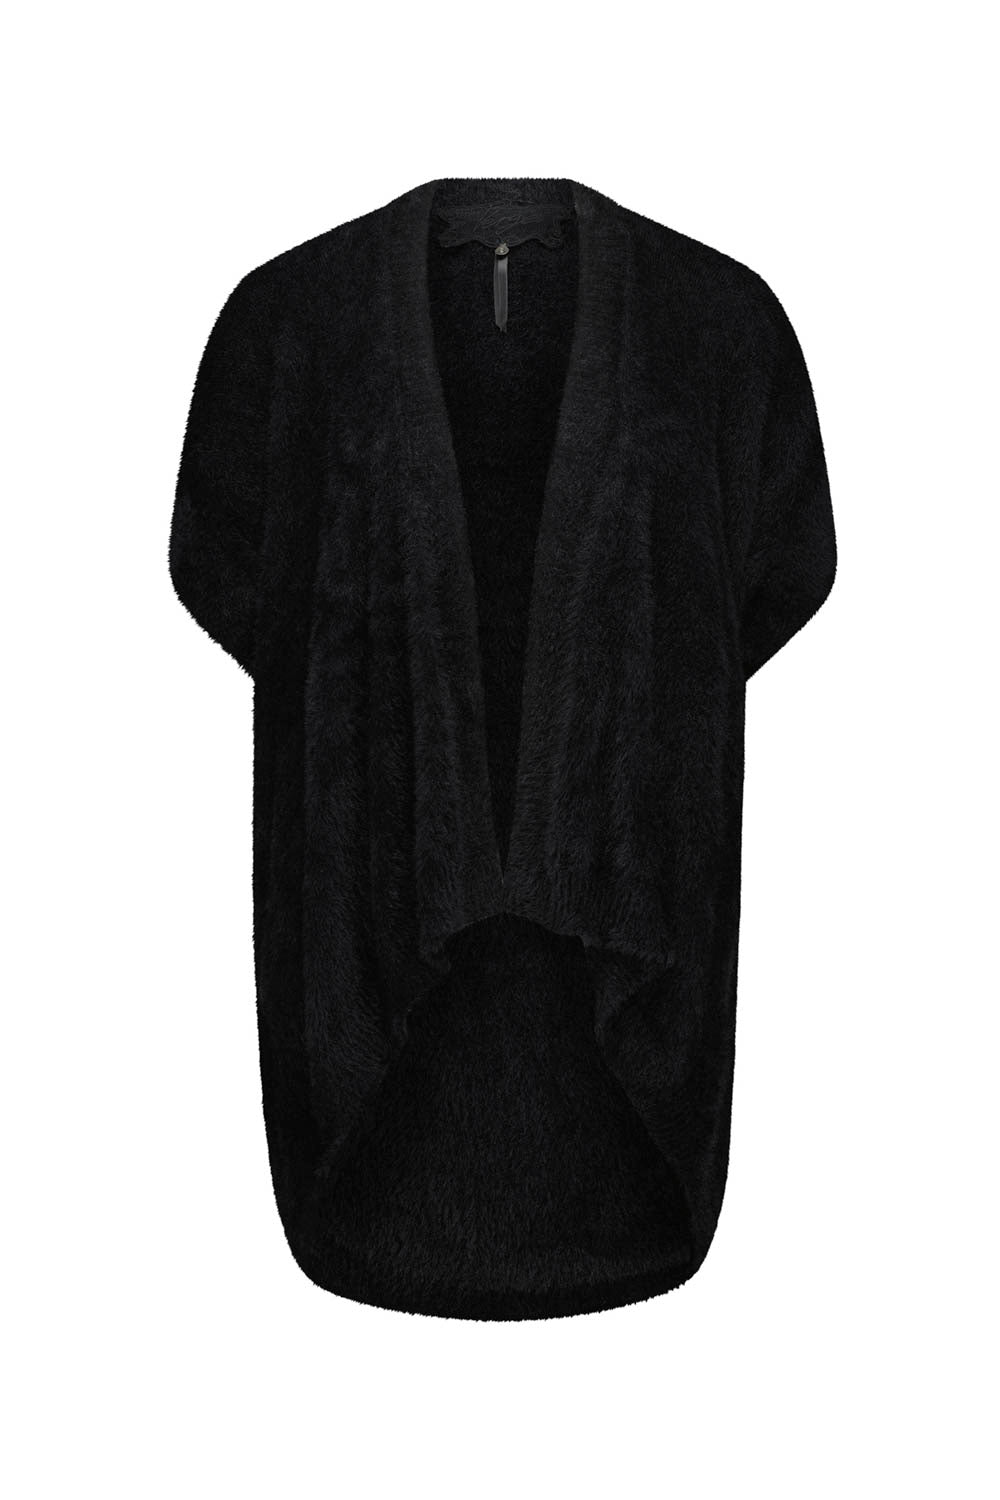 Emerson Vest - Black - Sweater VERGE